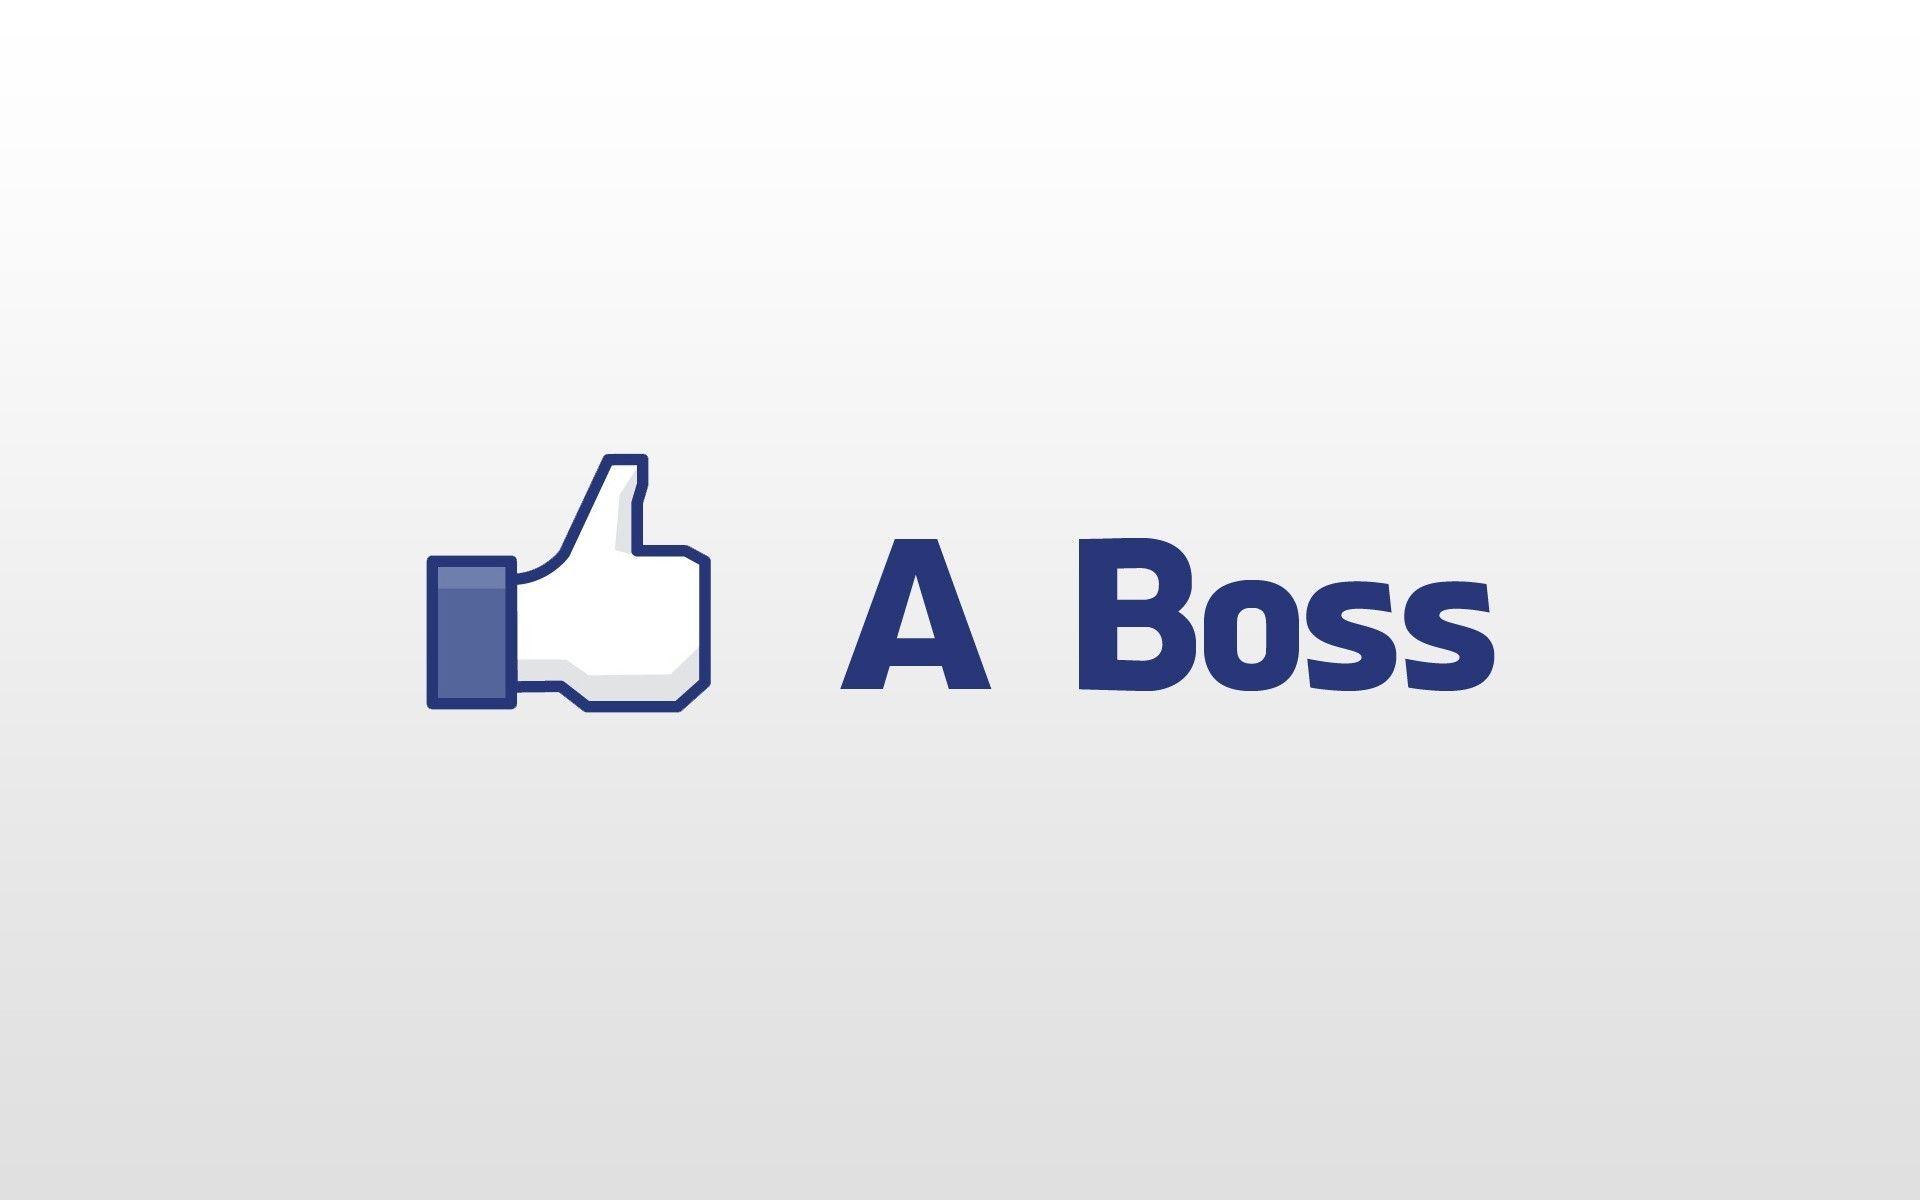 Facebook boss like a minimalistic thumbs up wallpaper. AllWallpaper